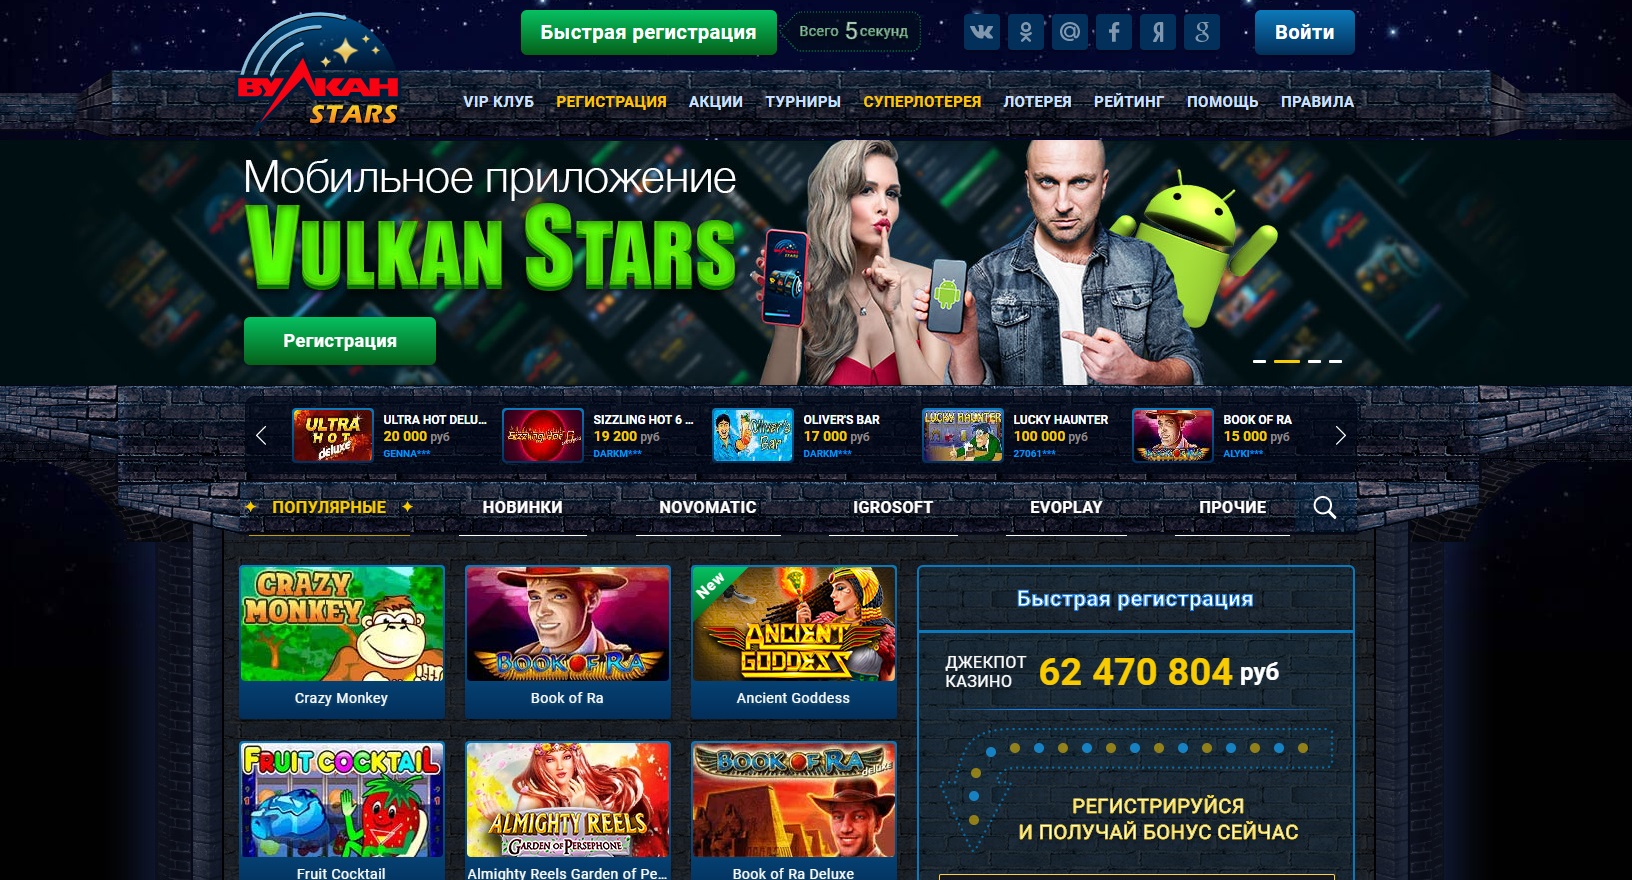 Онлайн казино vulcan stars официальное зеркало сайта казино онлайн бонусы без депозита